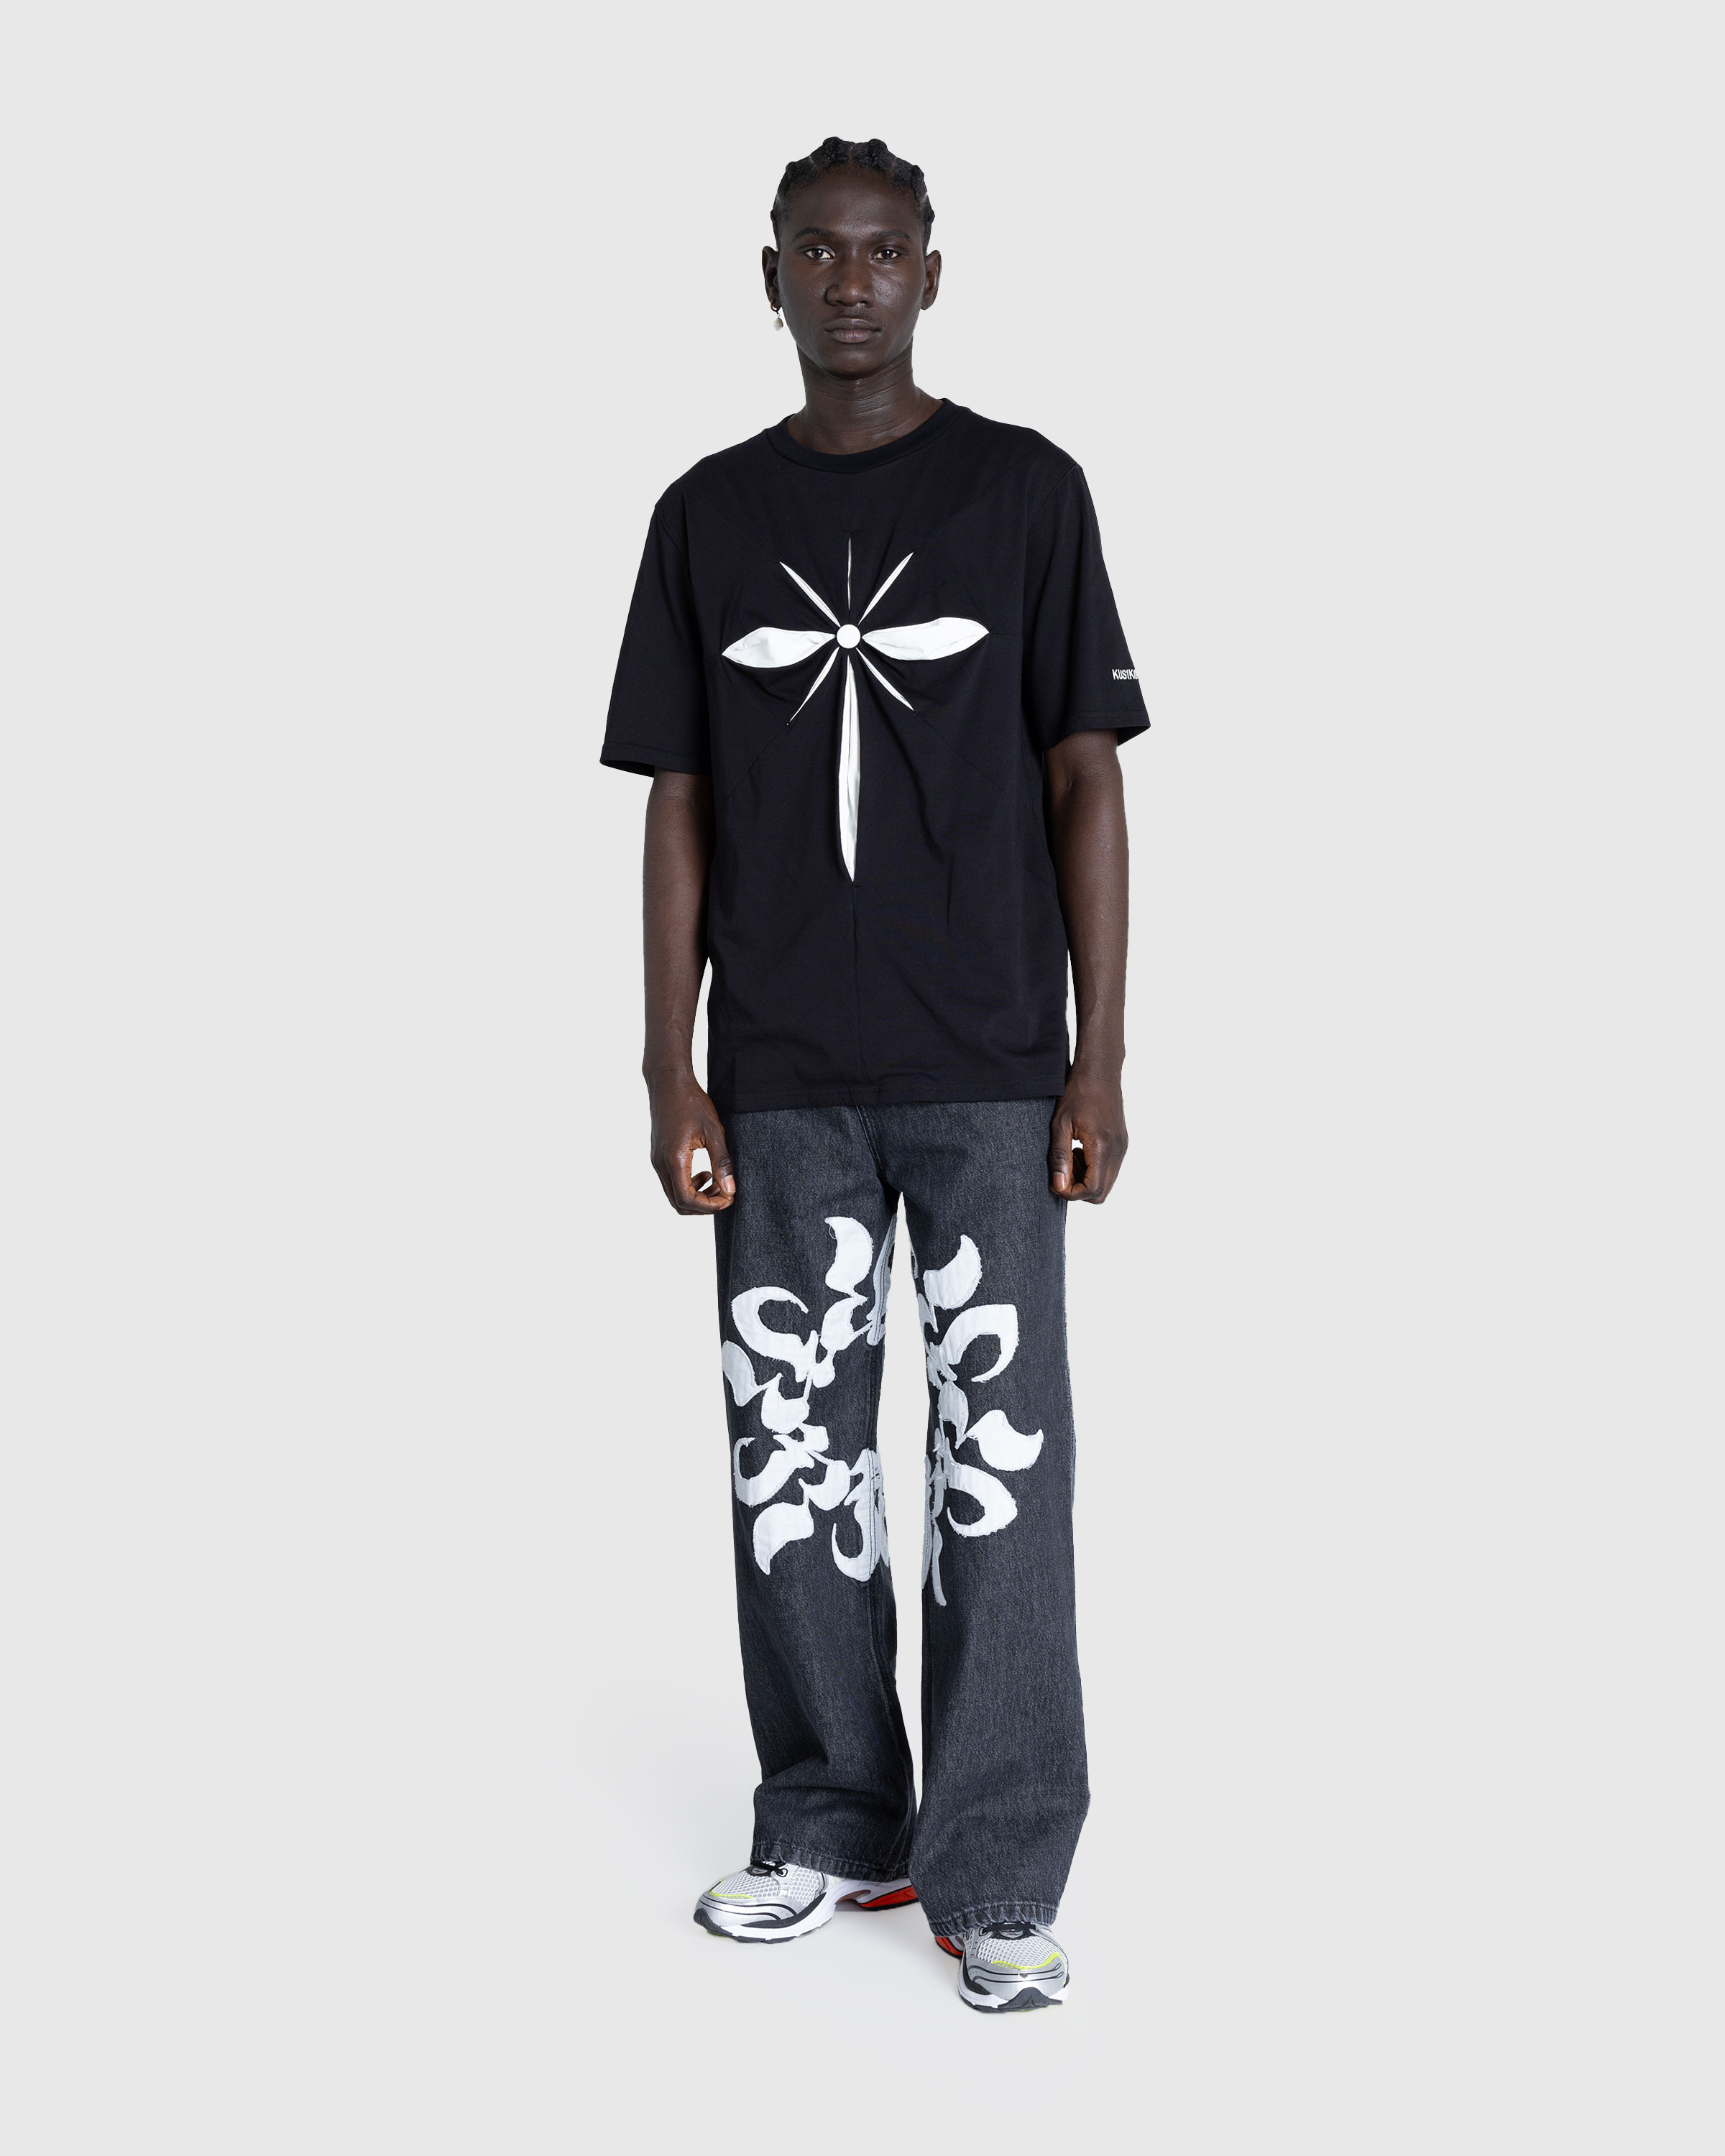 KUSIKOHC – Origami T-Shirt Black/White Alyssum - Tops - Black - Image 3